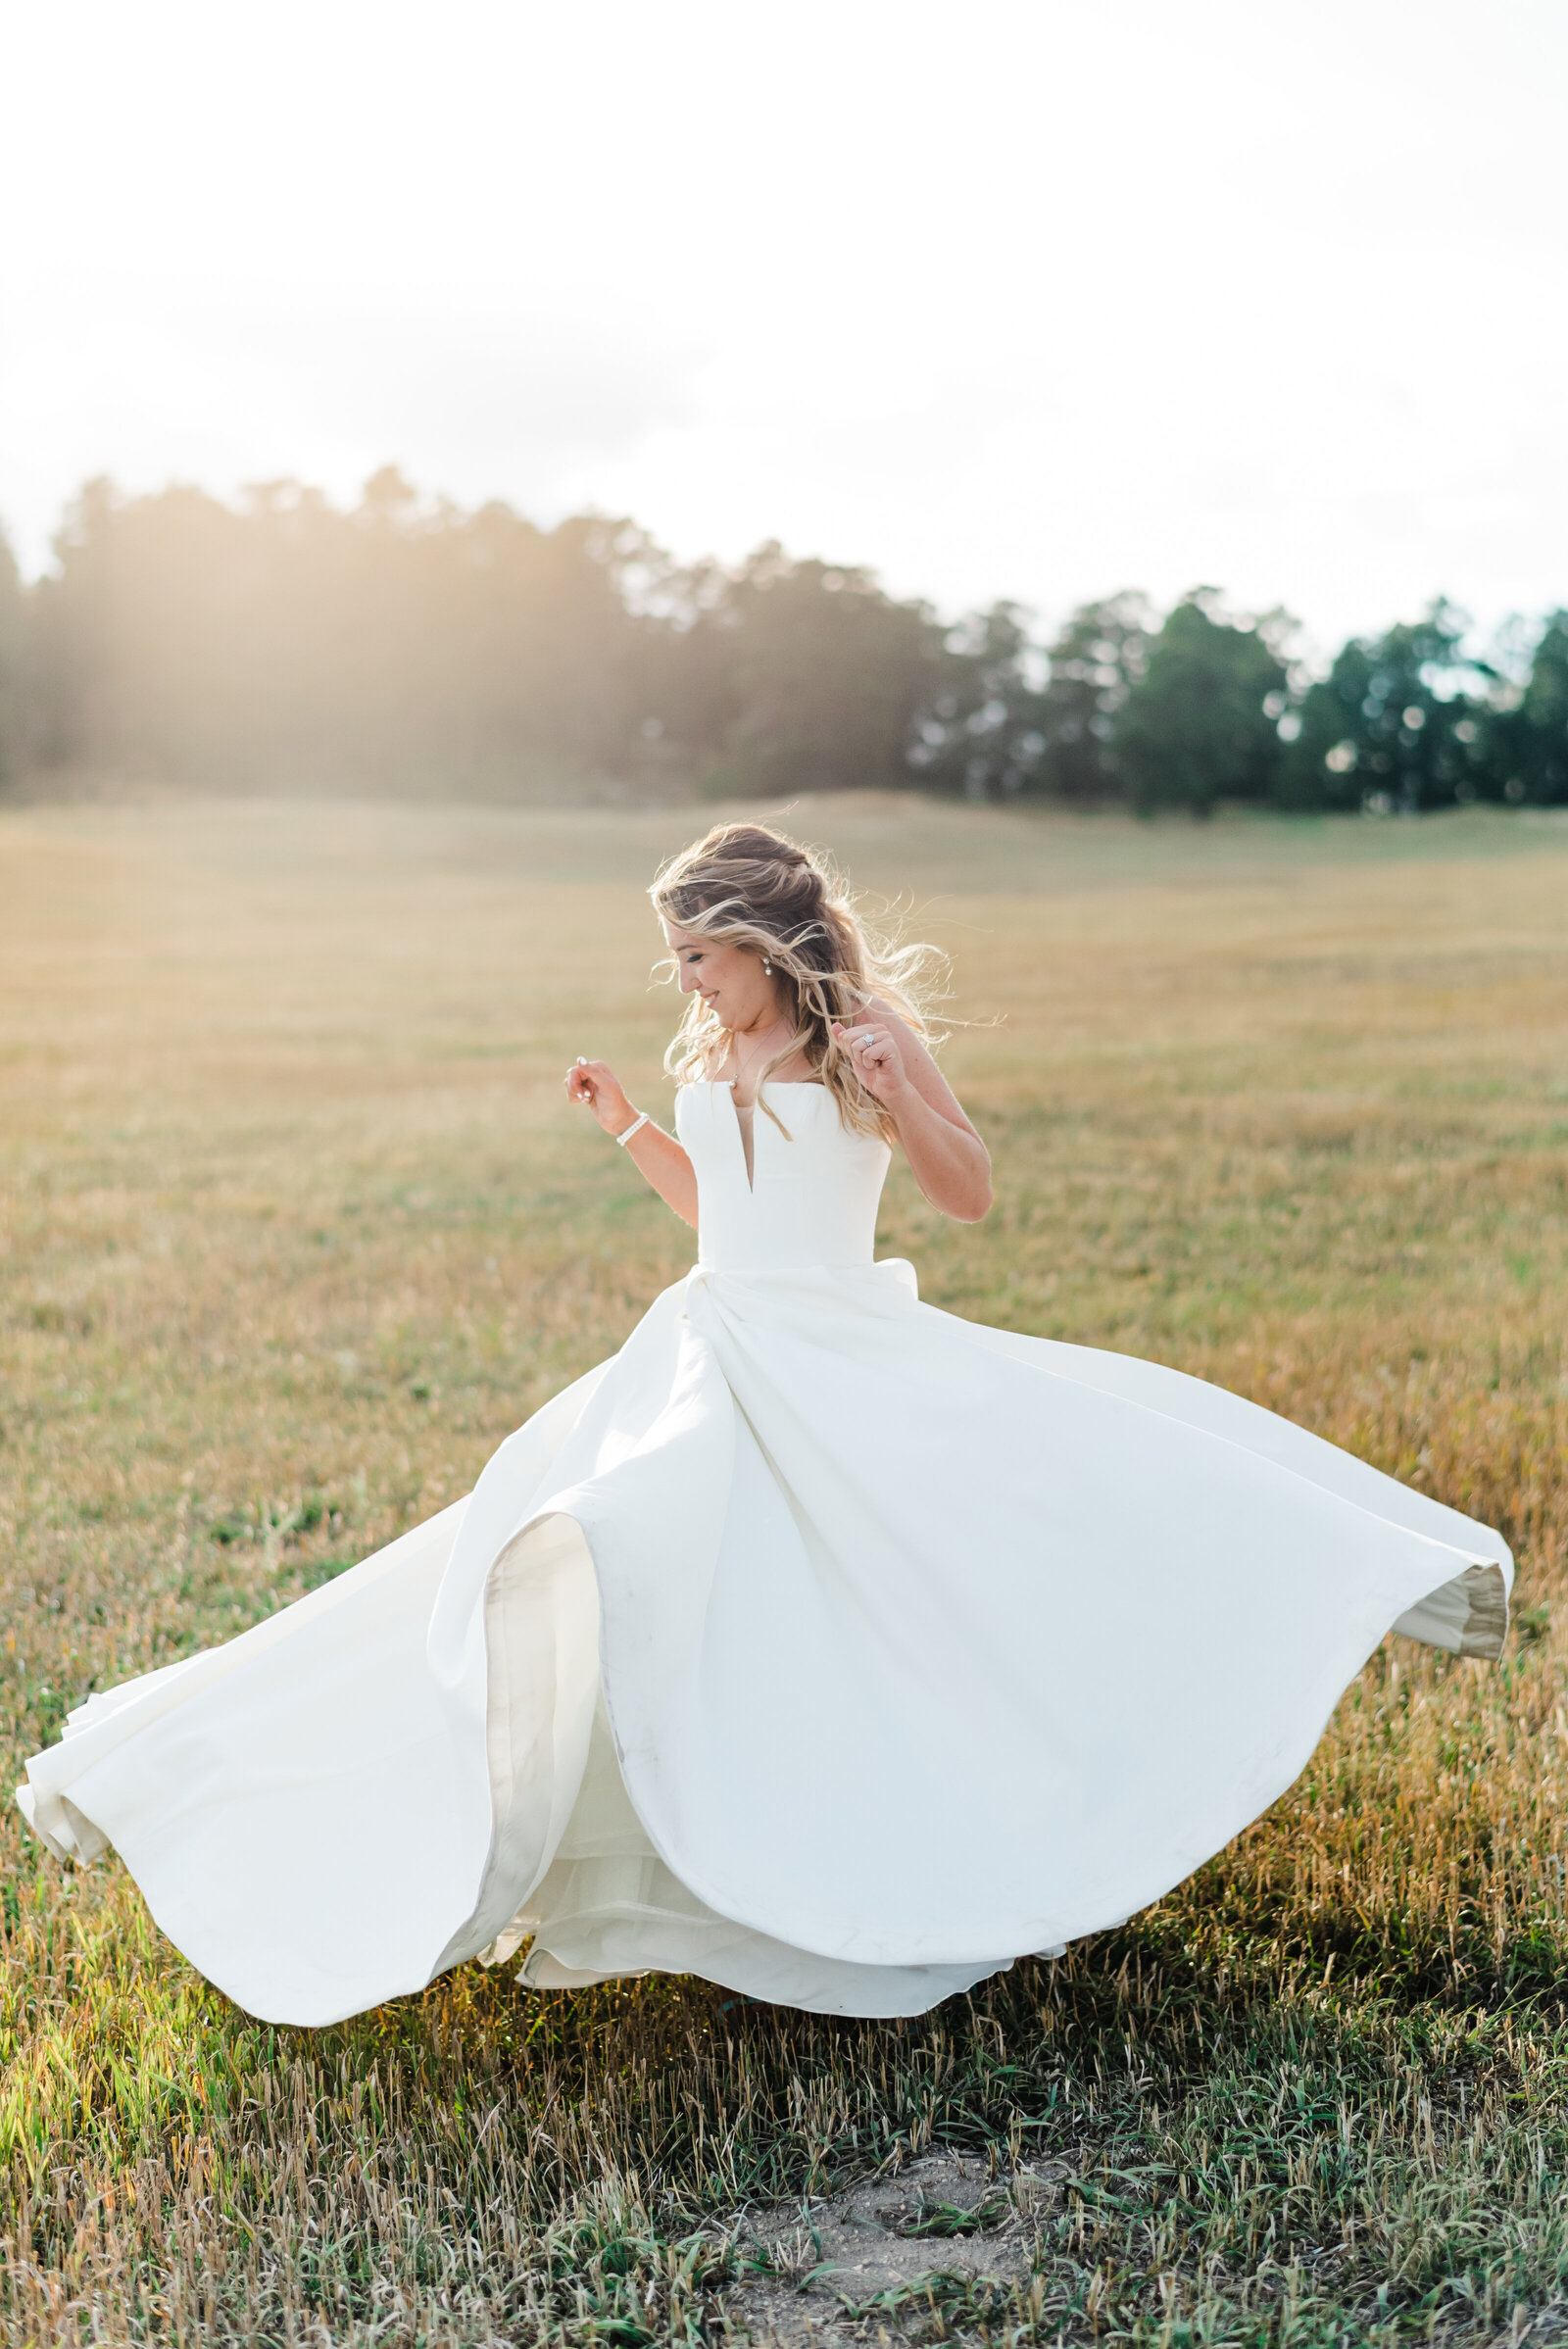 Bride spinning in big white dress